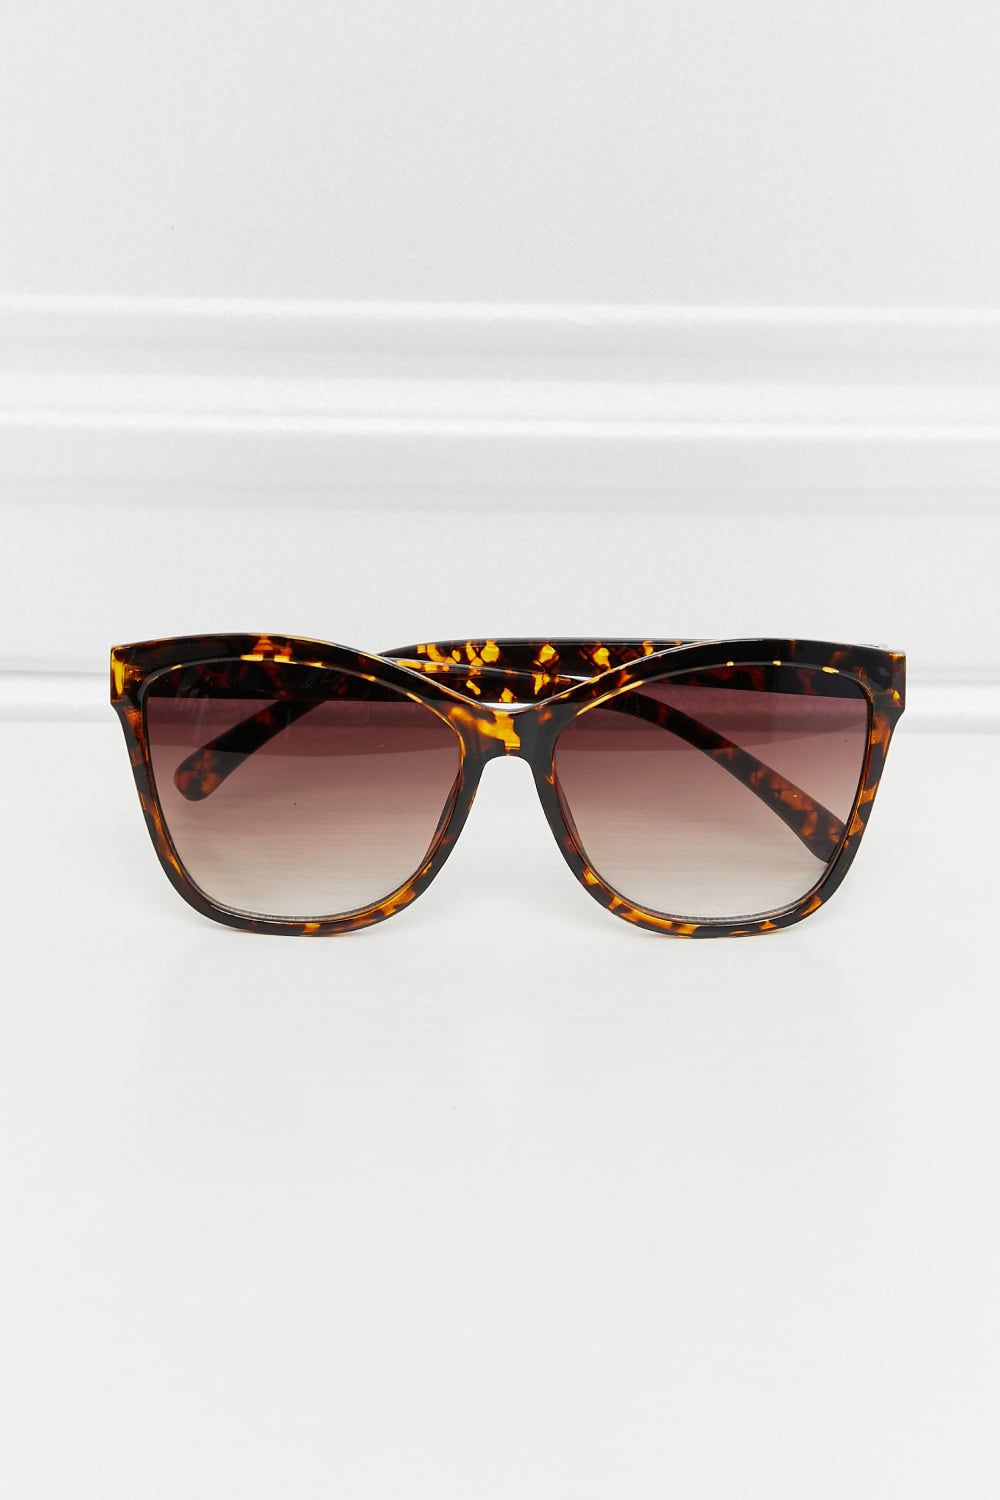 Ashlee Monae Sunglasses